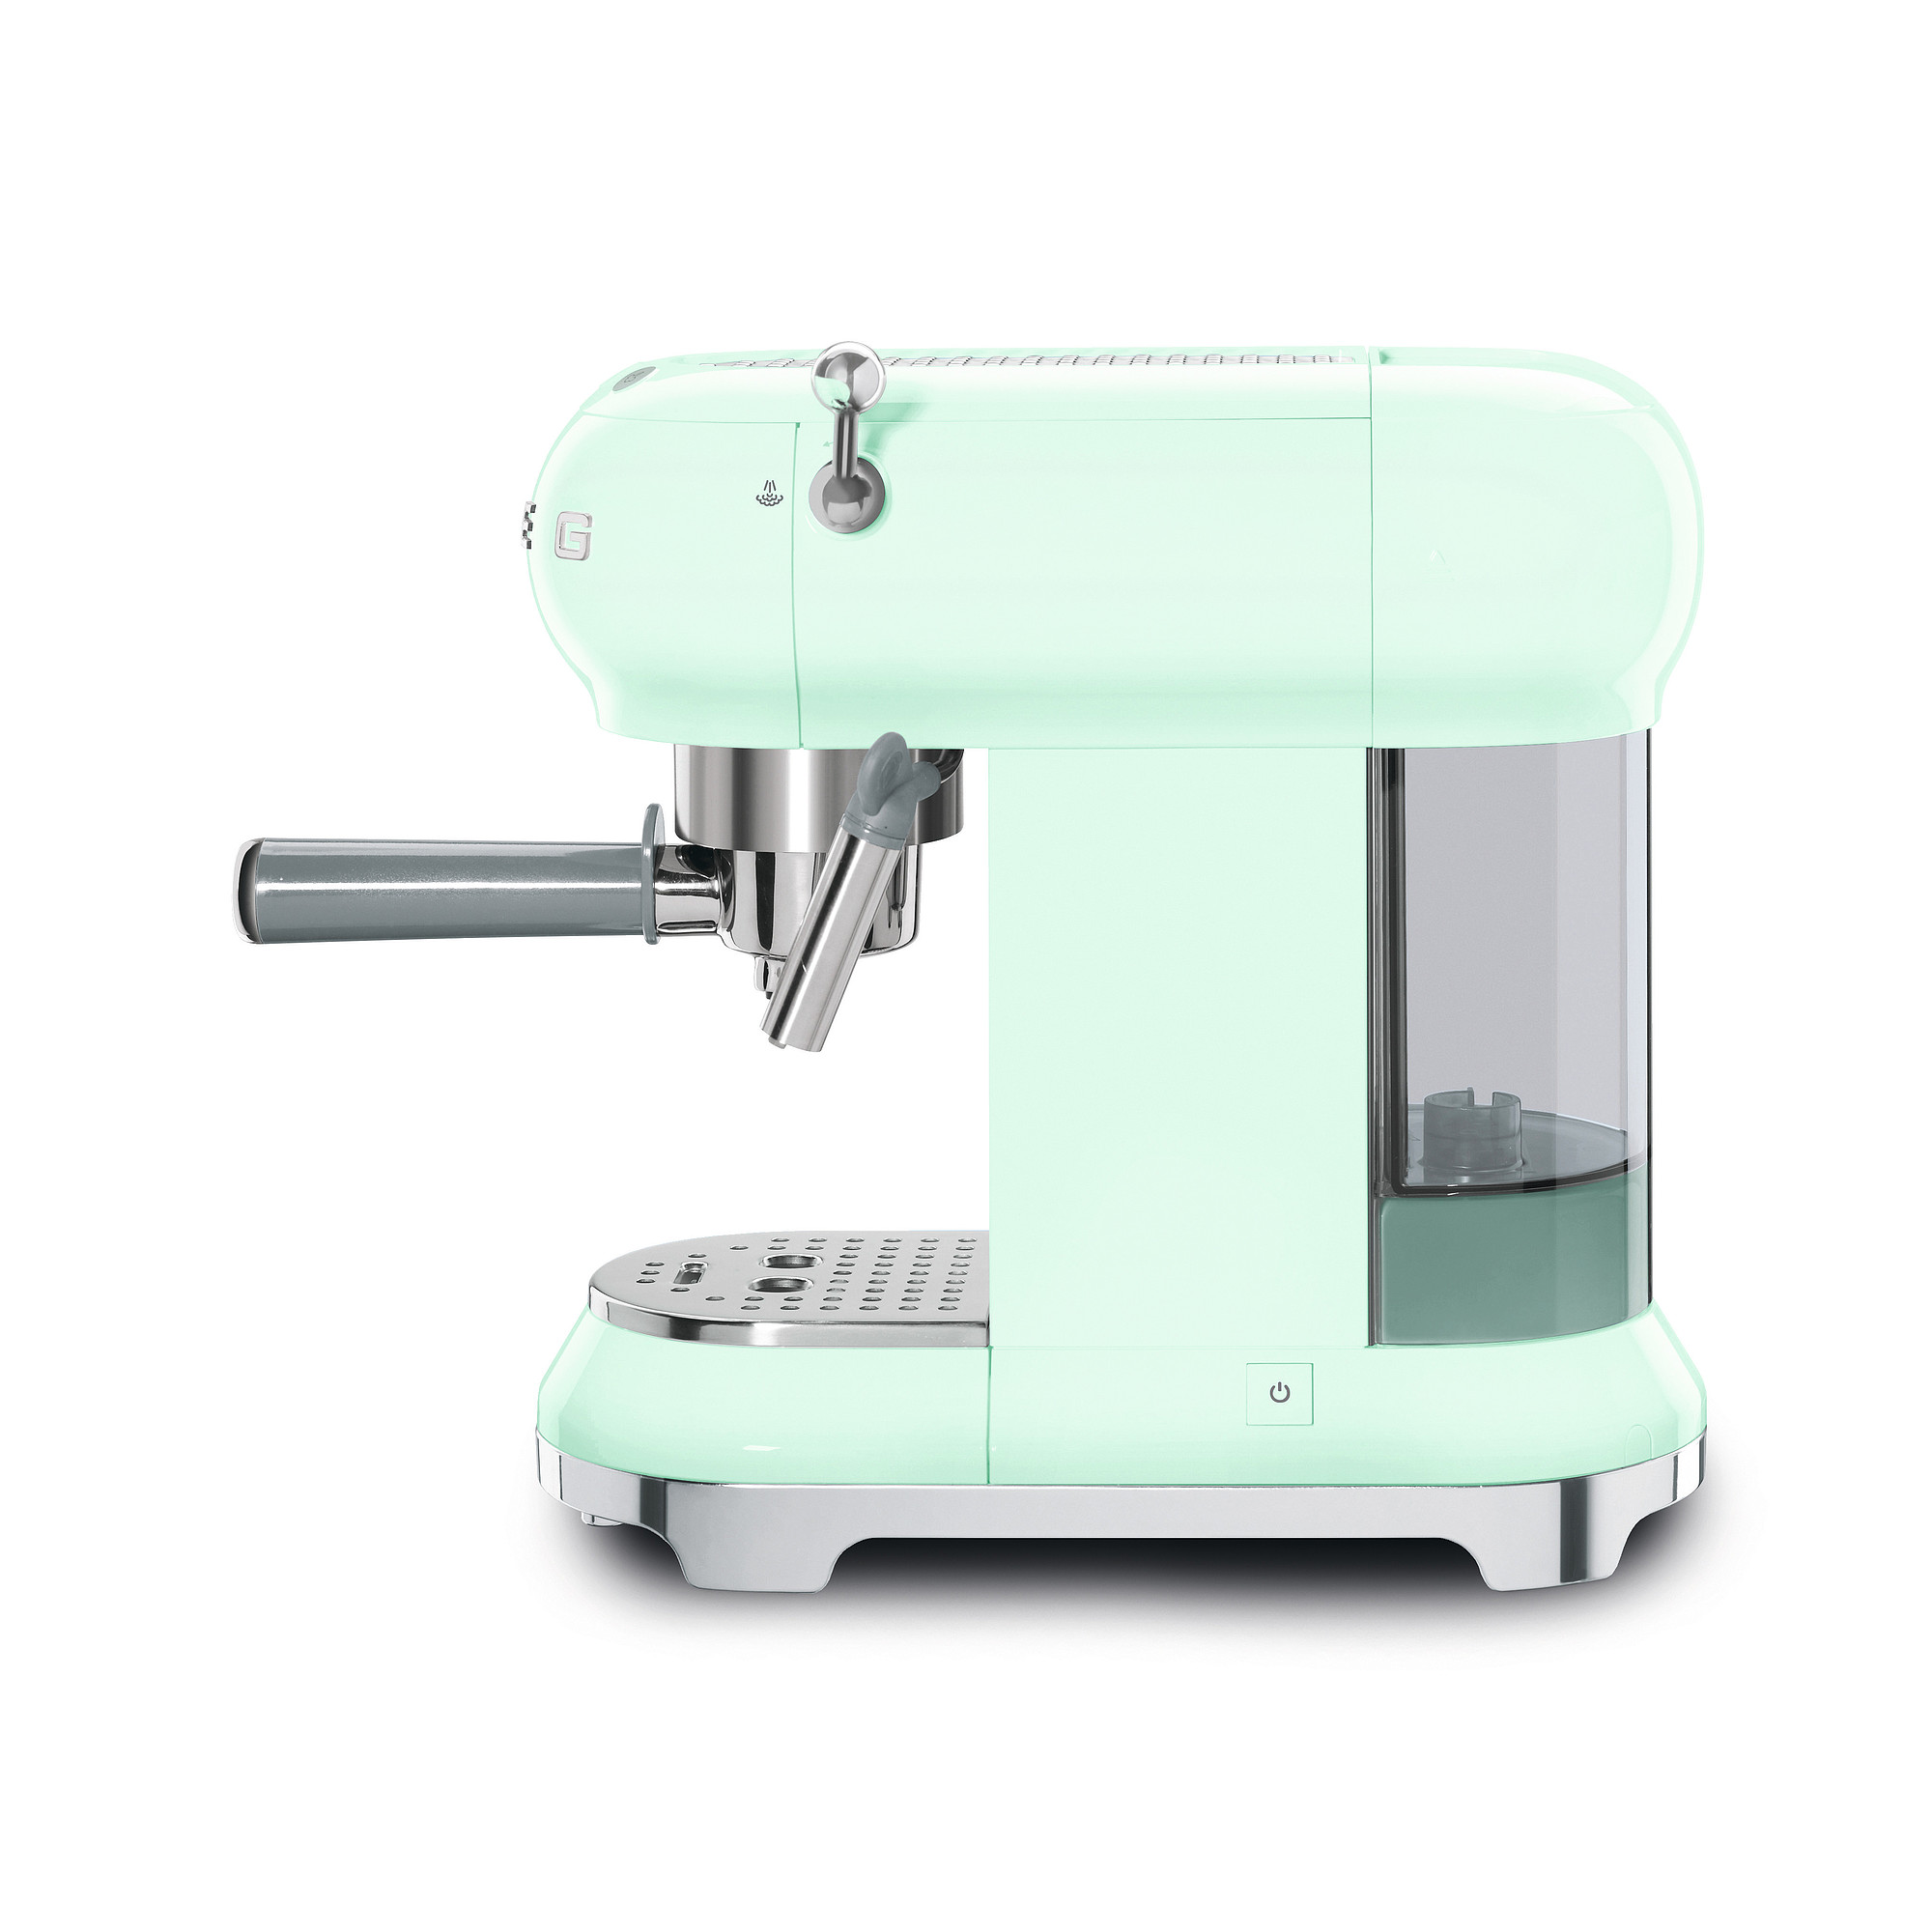 Smeg espressomaschine pastellgrün - Der Favorit unserer Tester